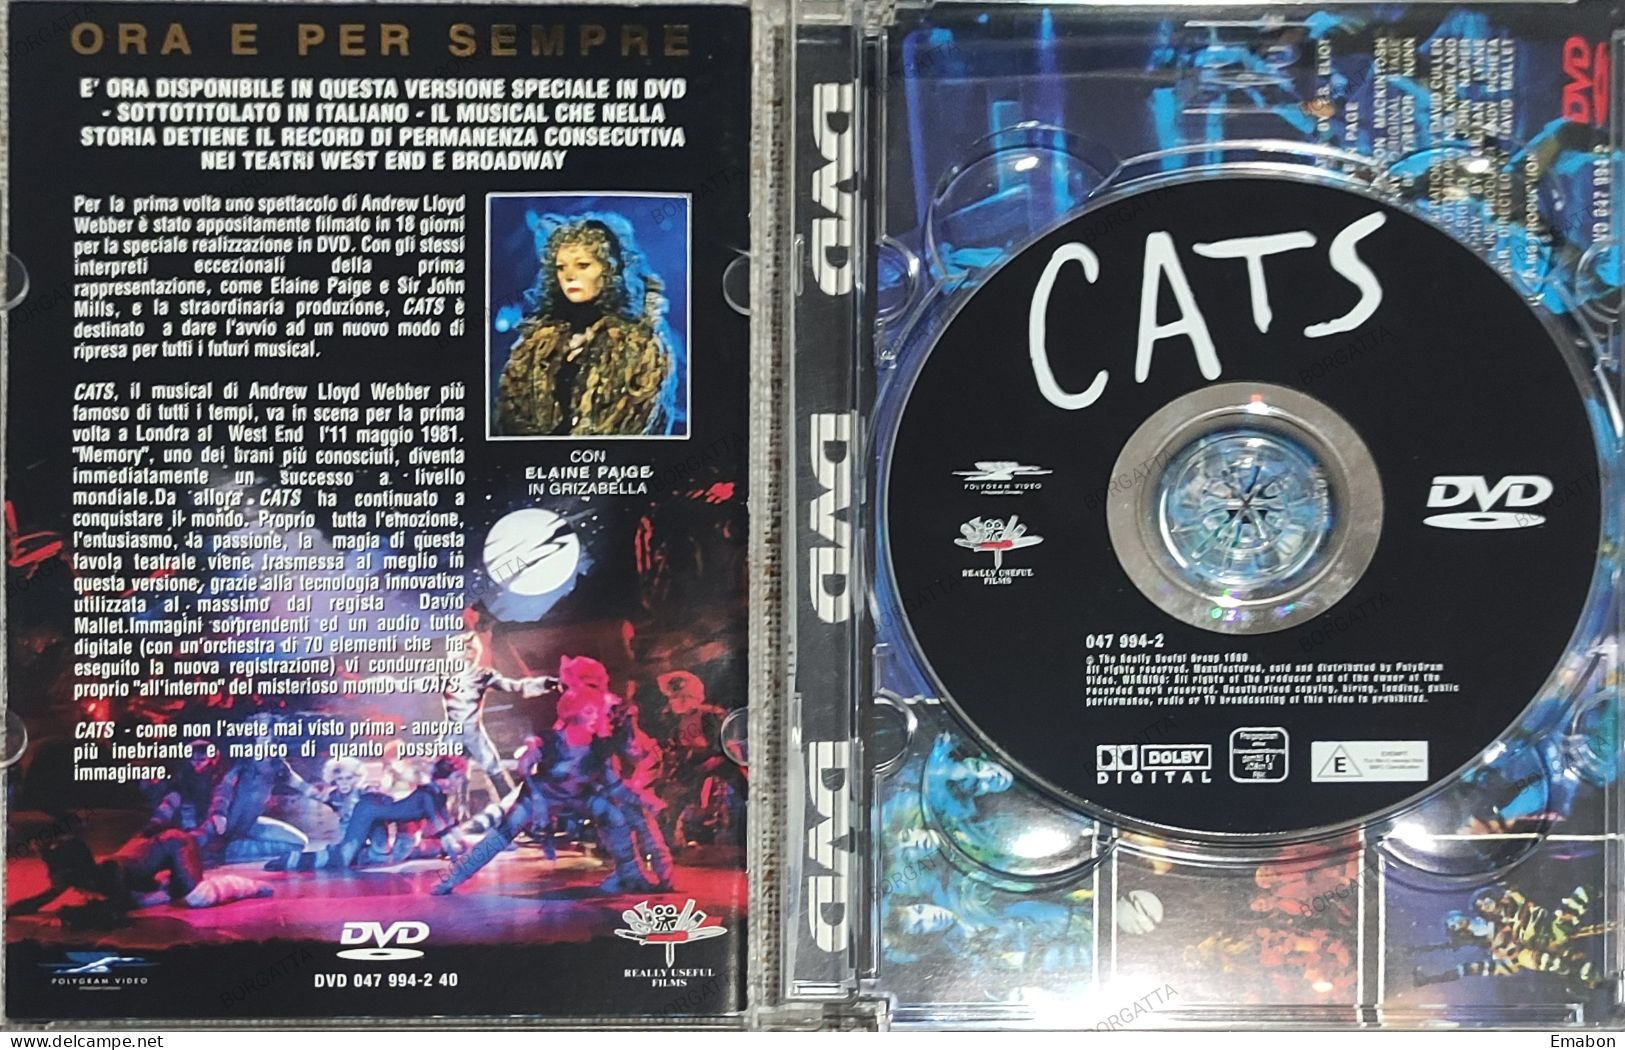 BORGATTA - MUSICAL-  Dvd CATS - ANDREW LLOYD WEBBER - THE REALLY 1998 - USATO In Buono Stato - Musicalkomedie